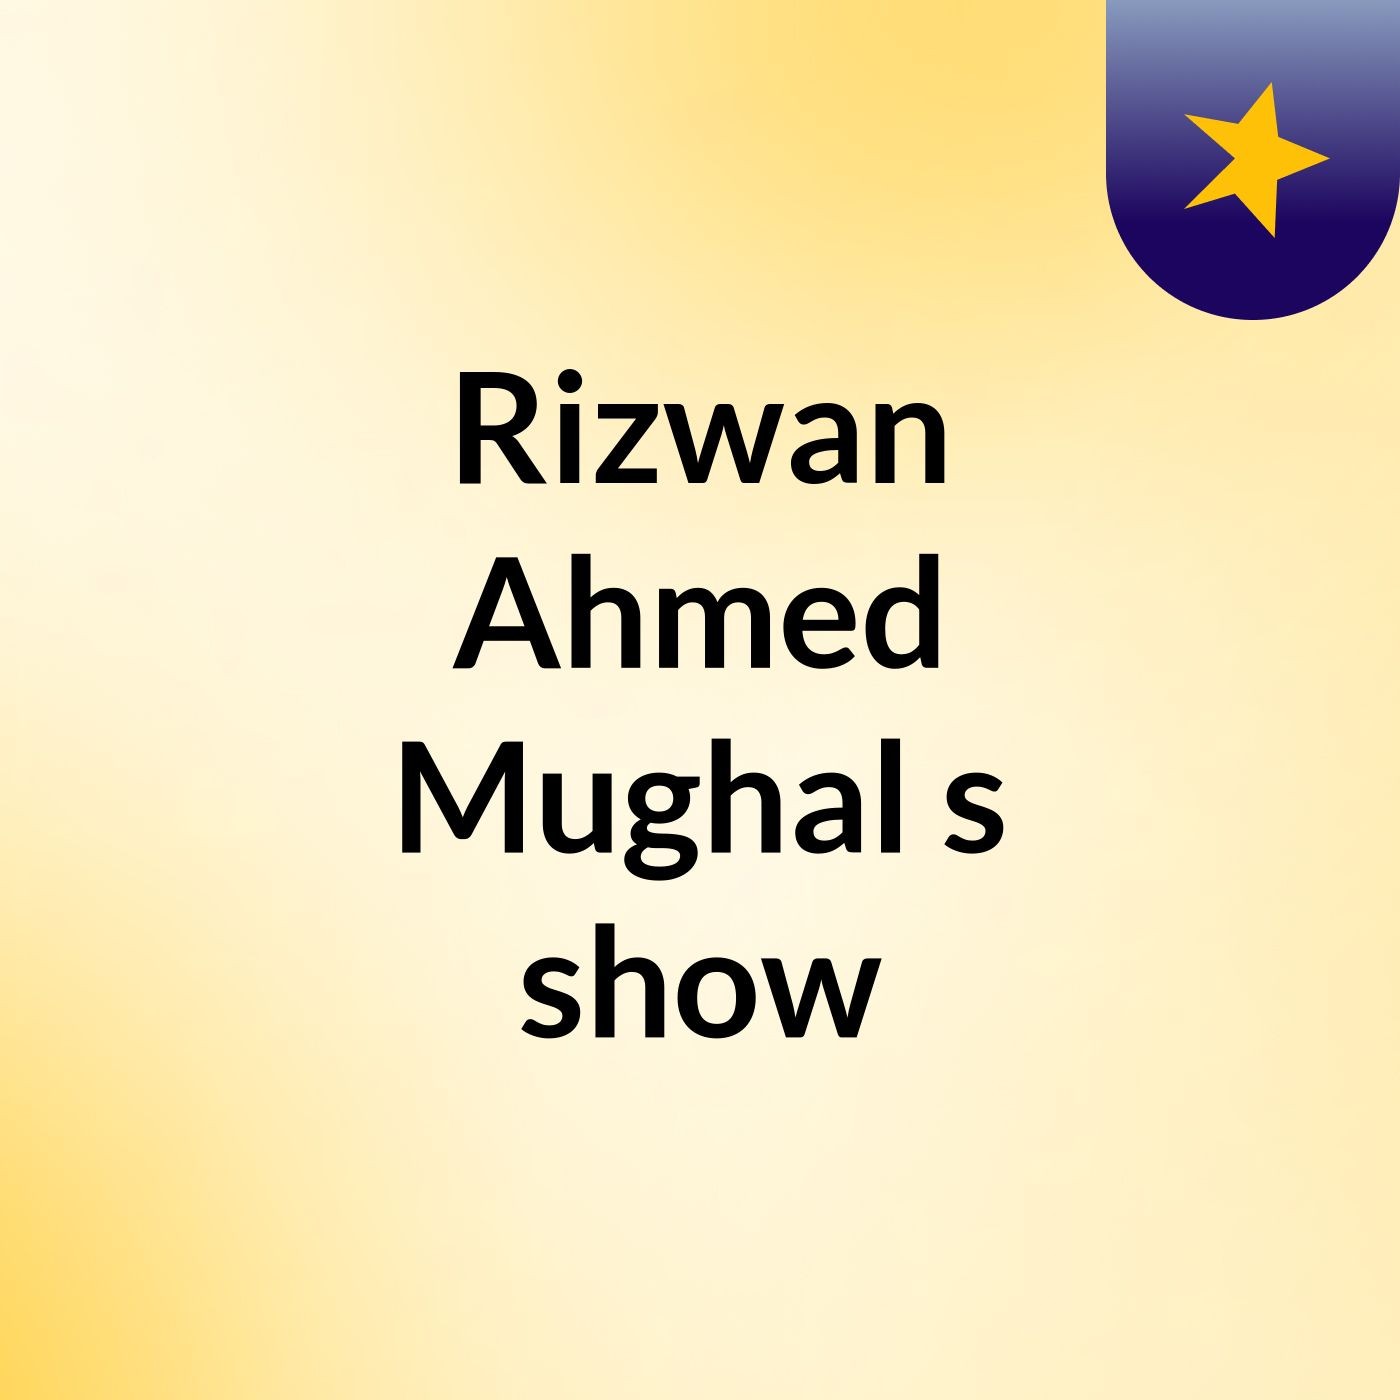 Rizwan Ahmed Mughal's show